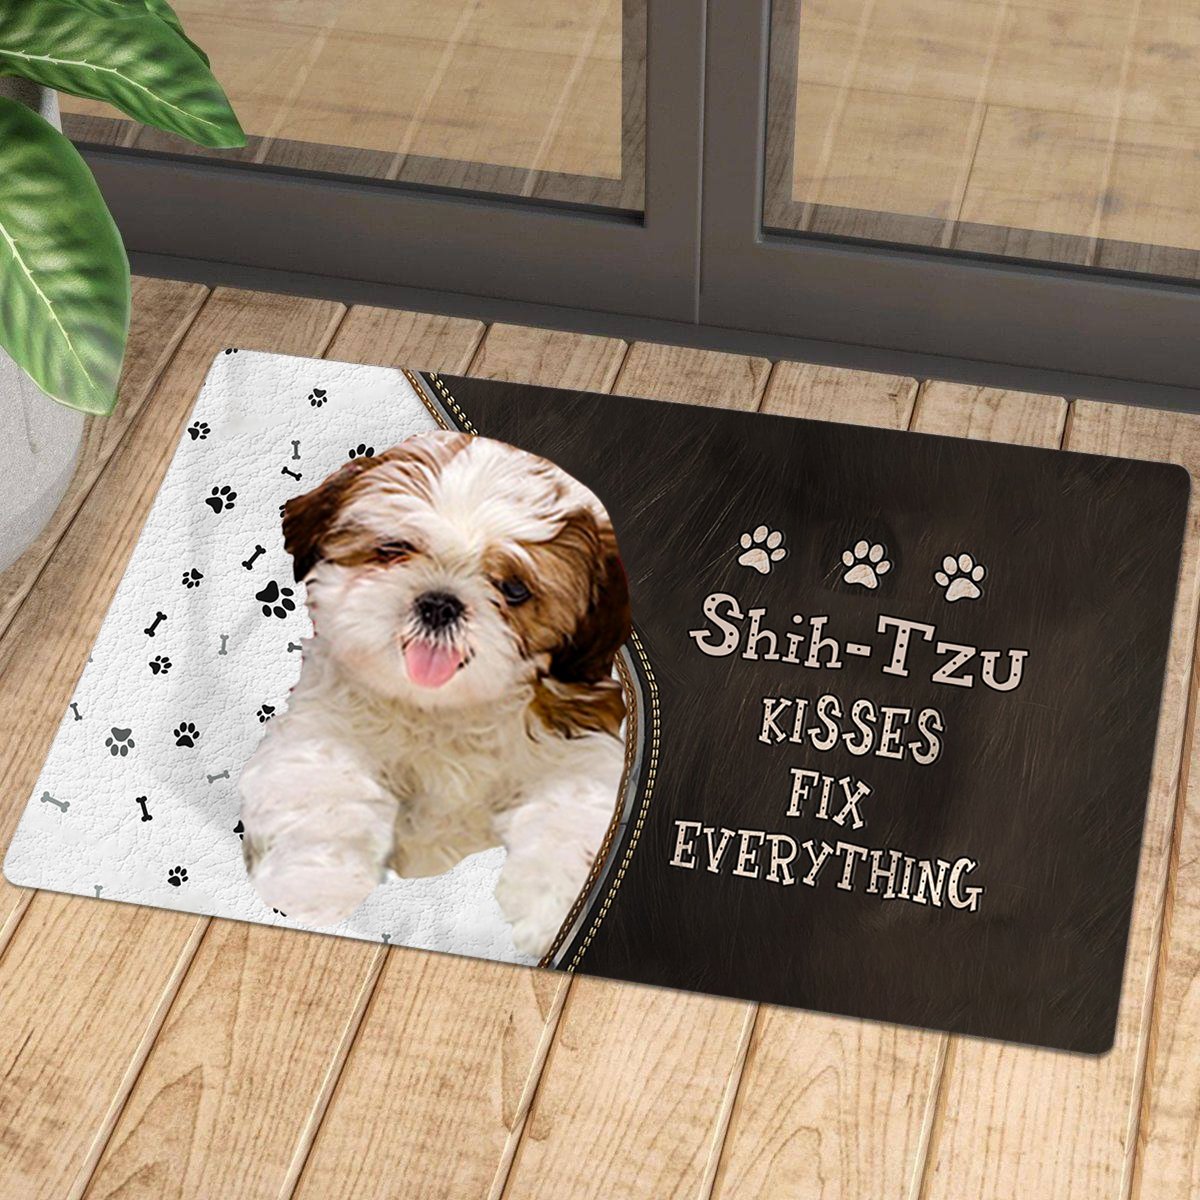 Shih Tzu3 Kisses Fix Everything Doormat